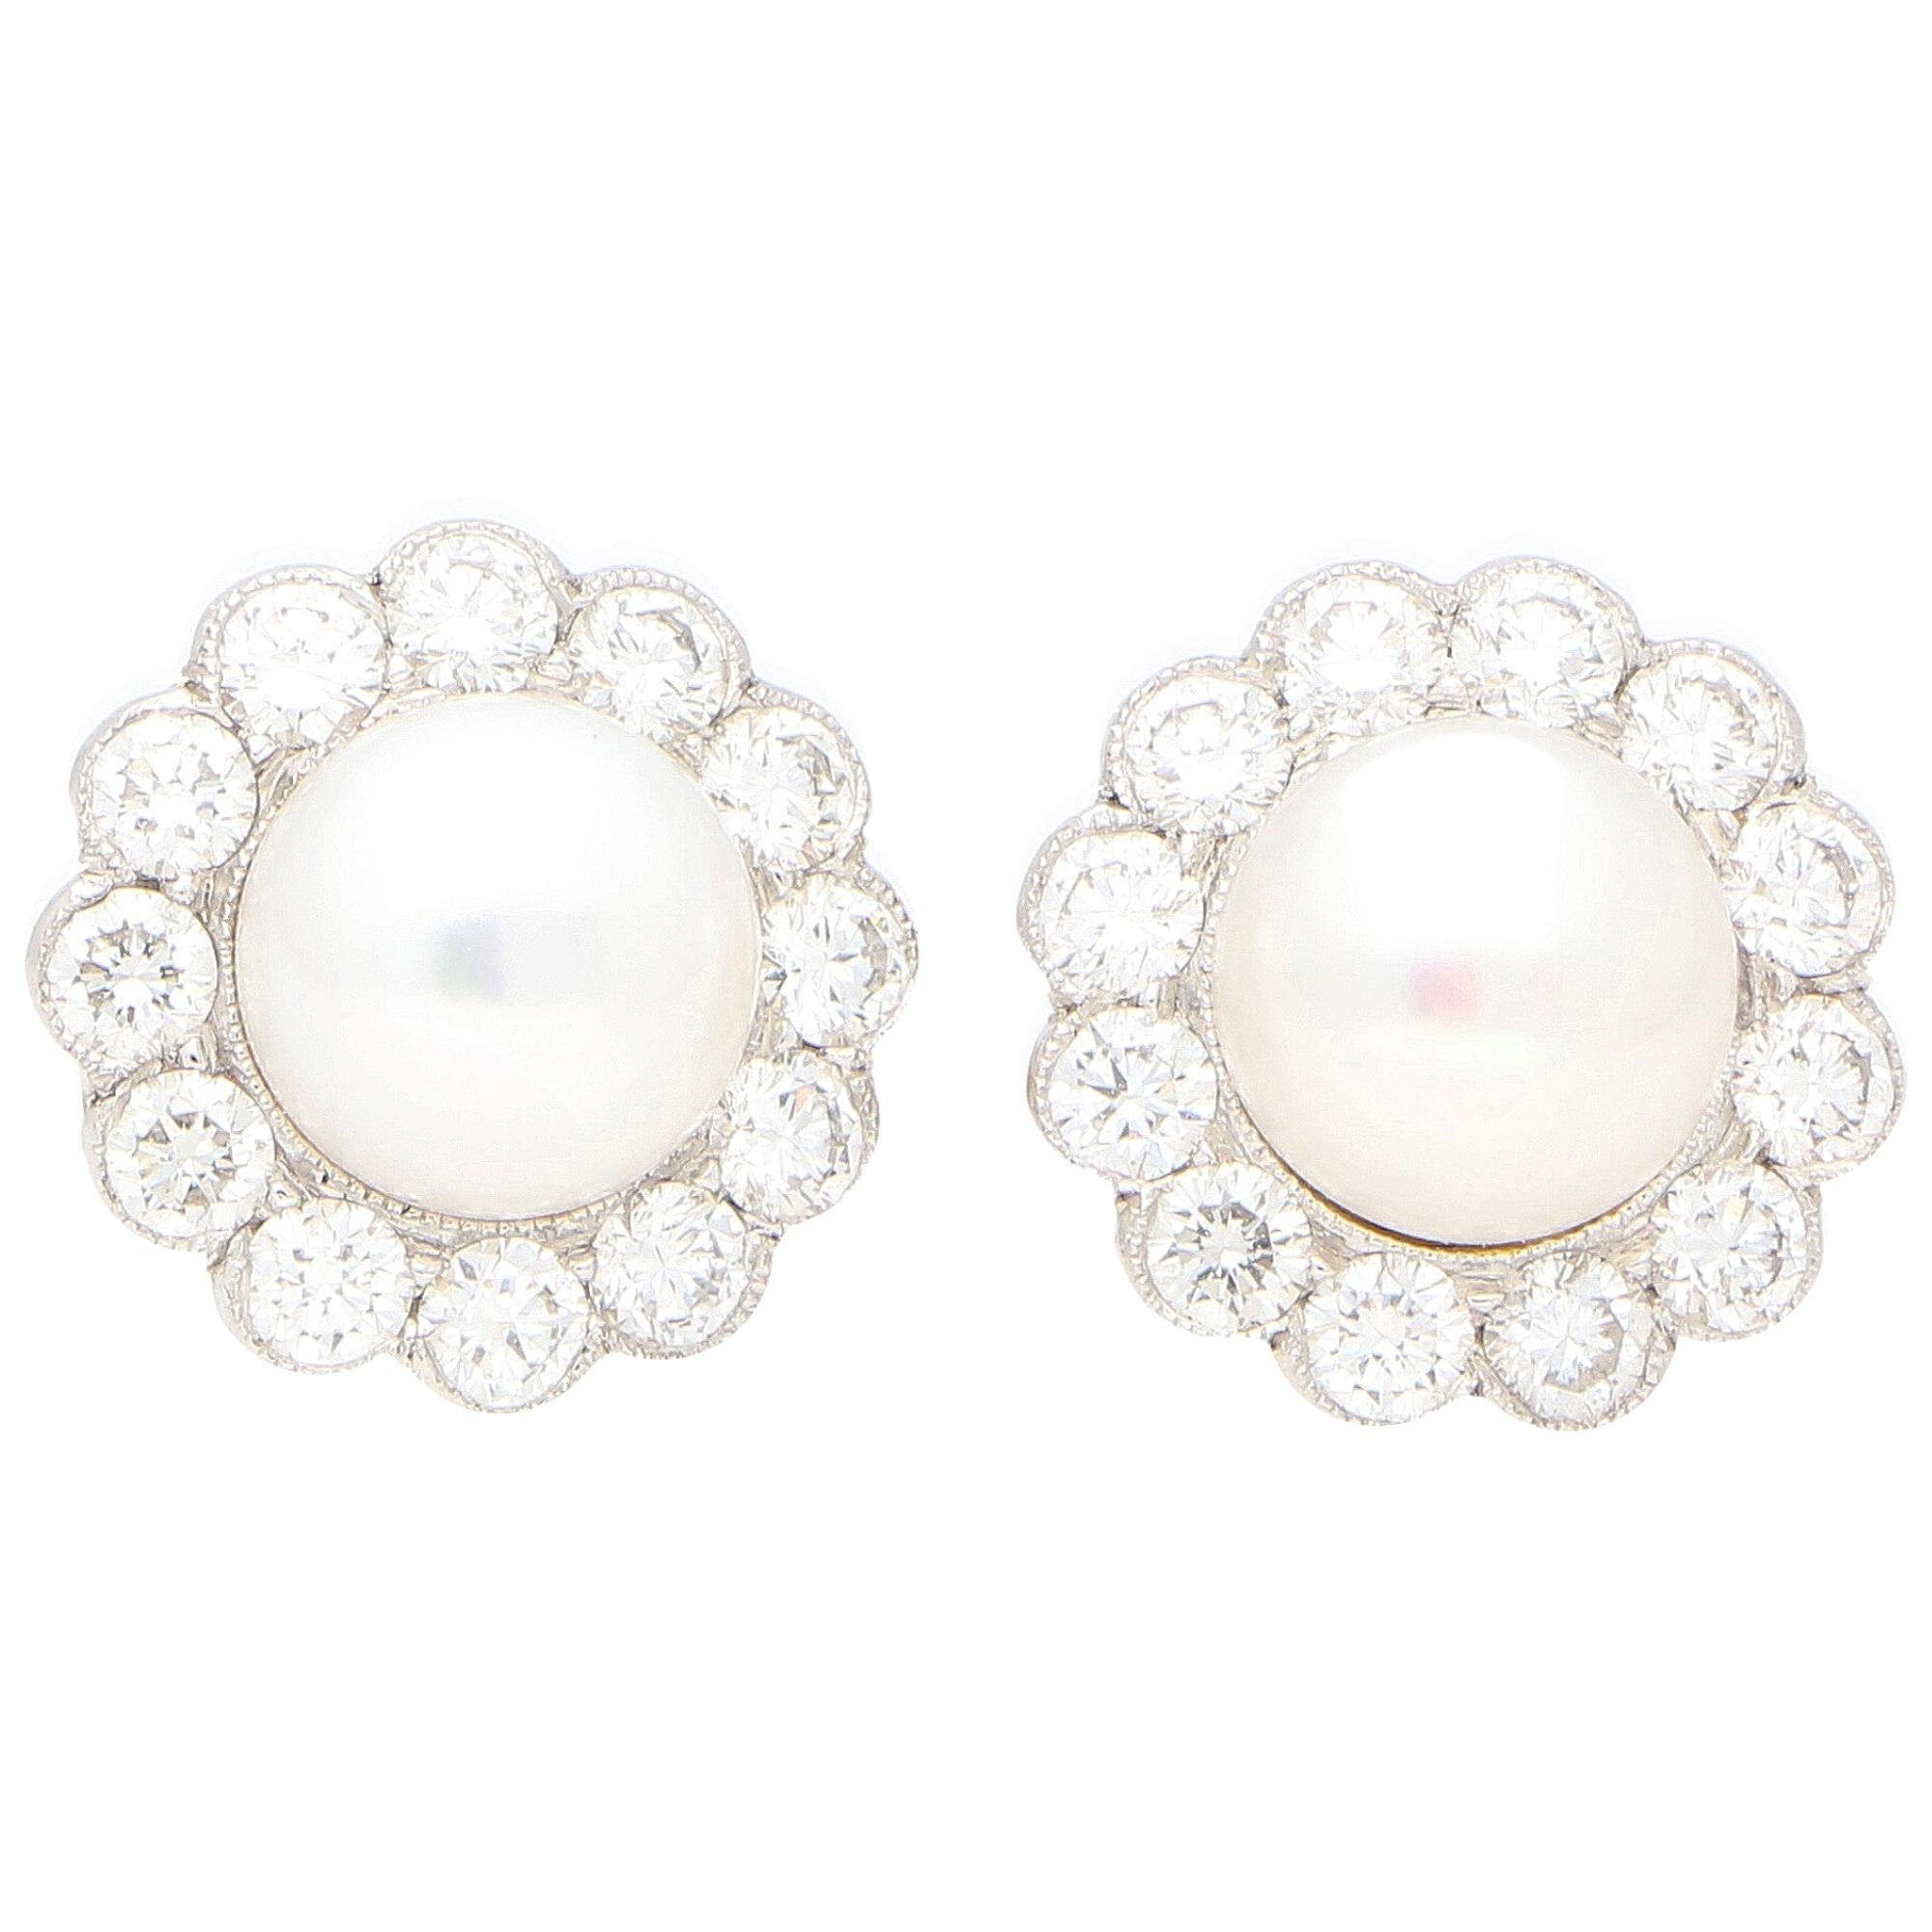 Diamond and White Pearl Cluster Earrings Set in 18 Karat White Gold